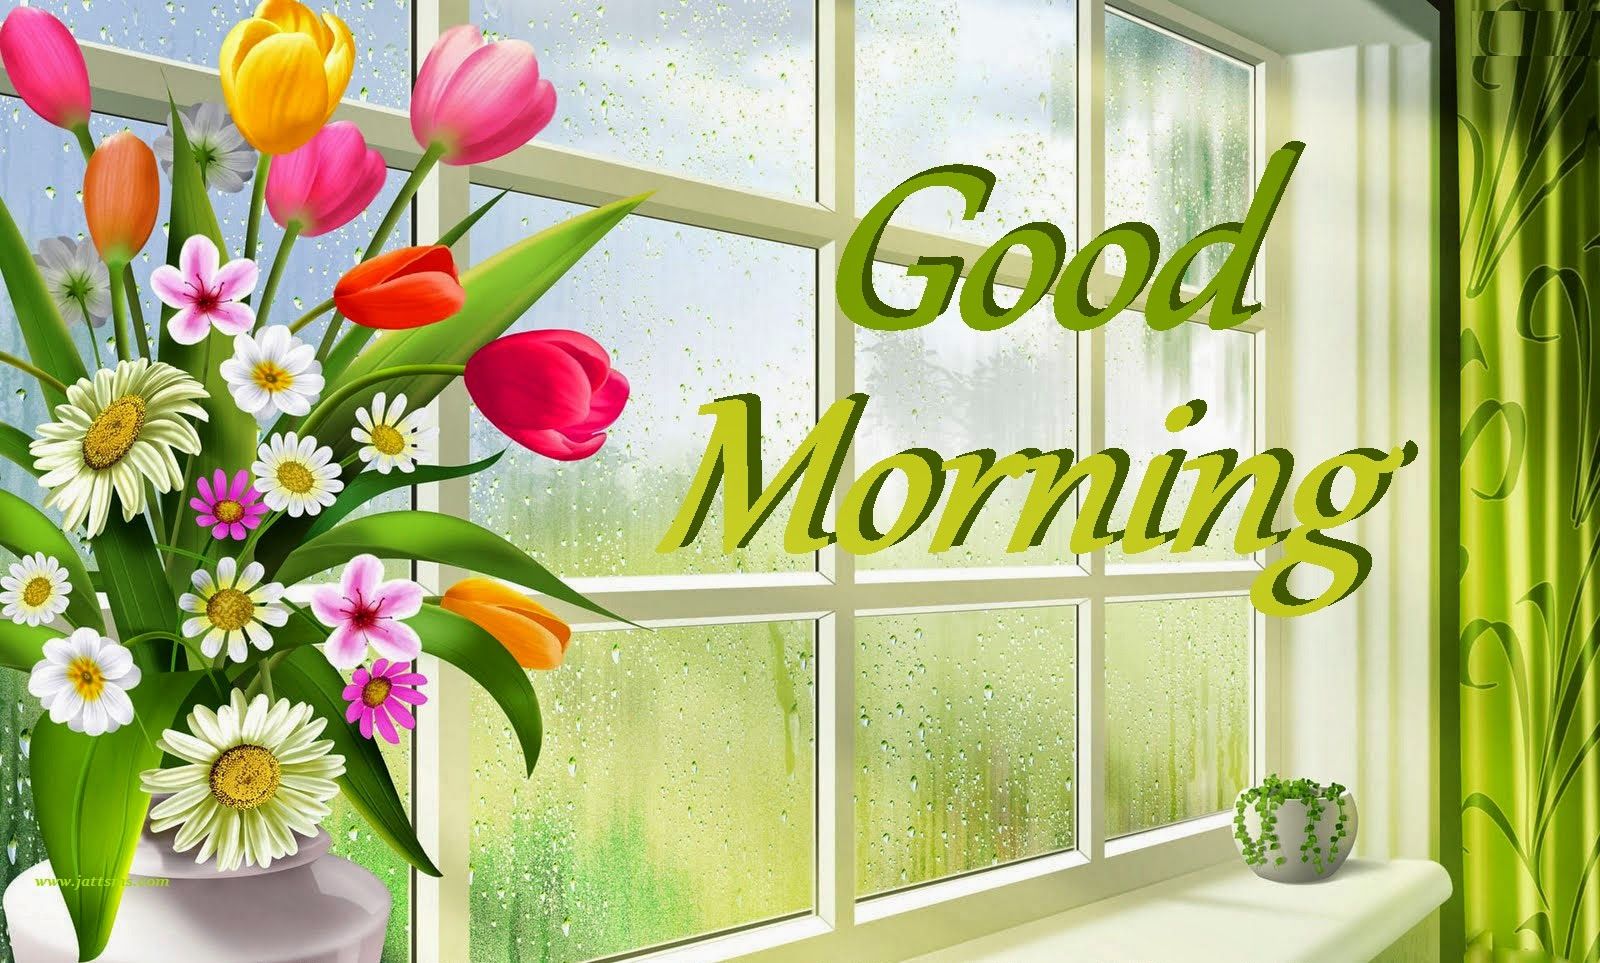 Good Morning Wallpaper Images Download - 1600x963 Wallpaper 